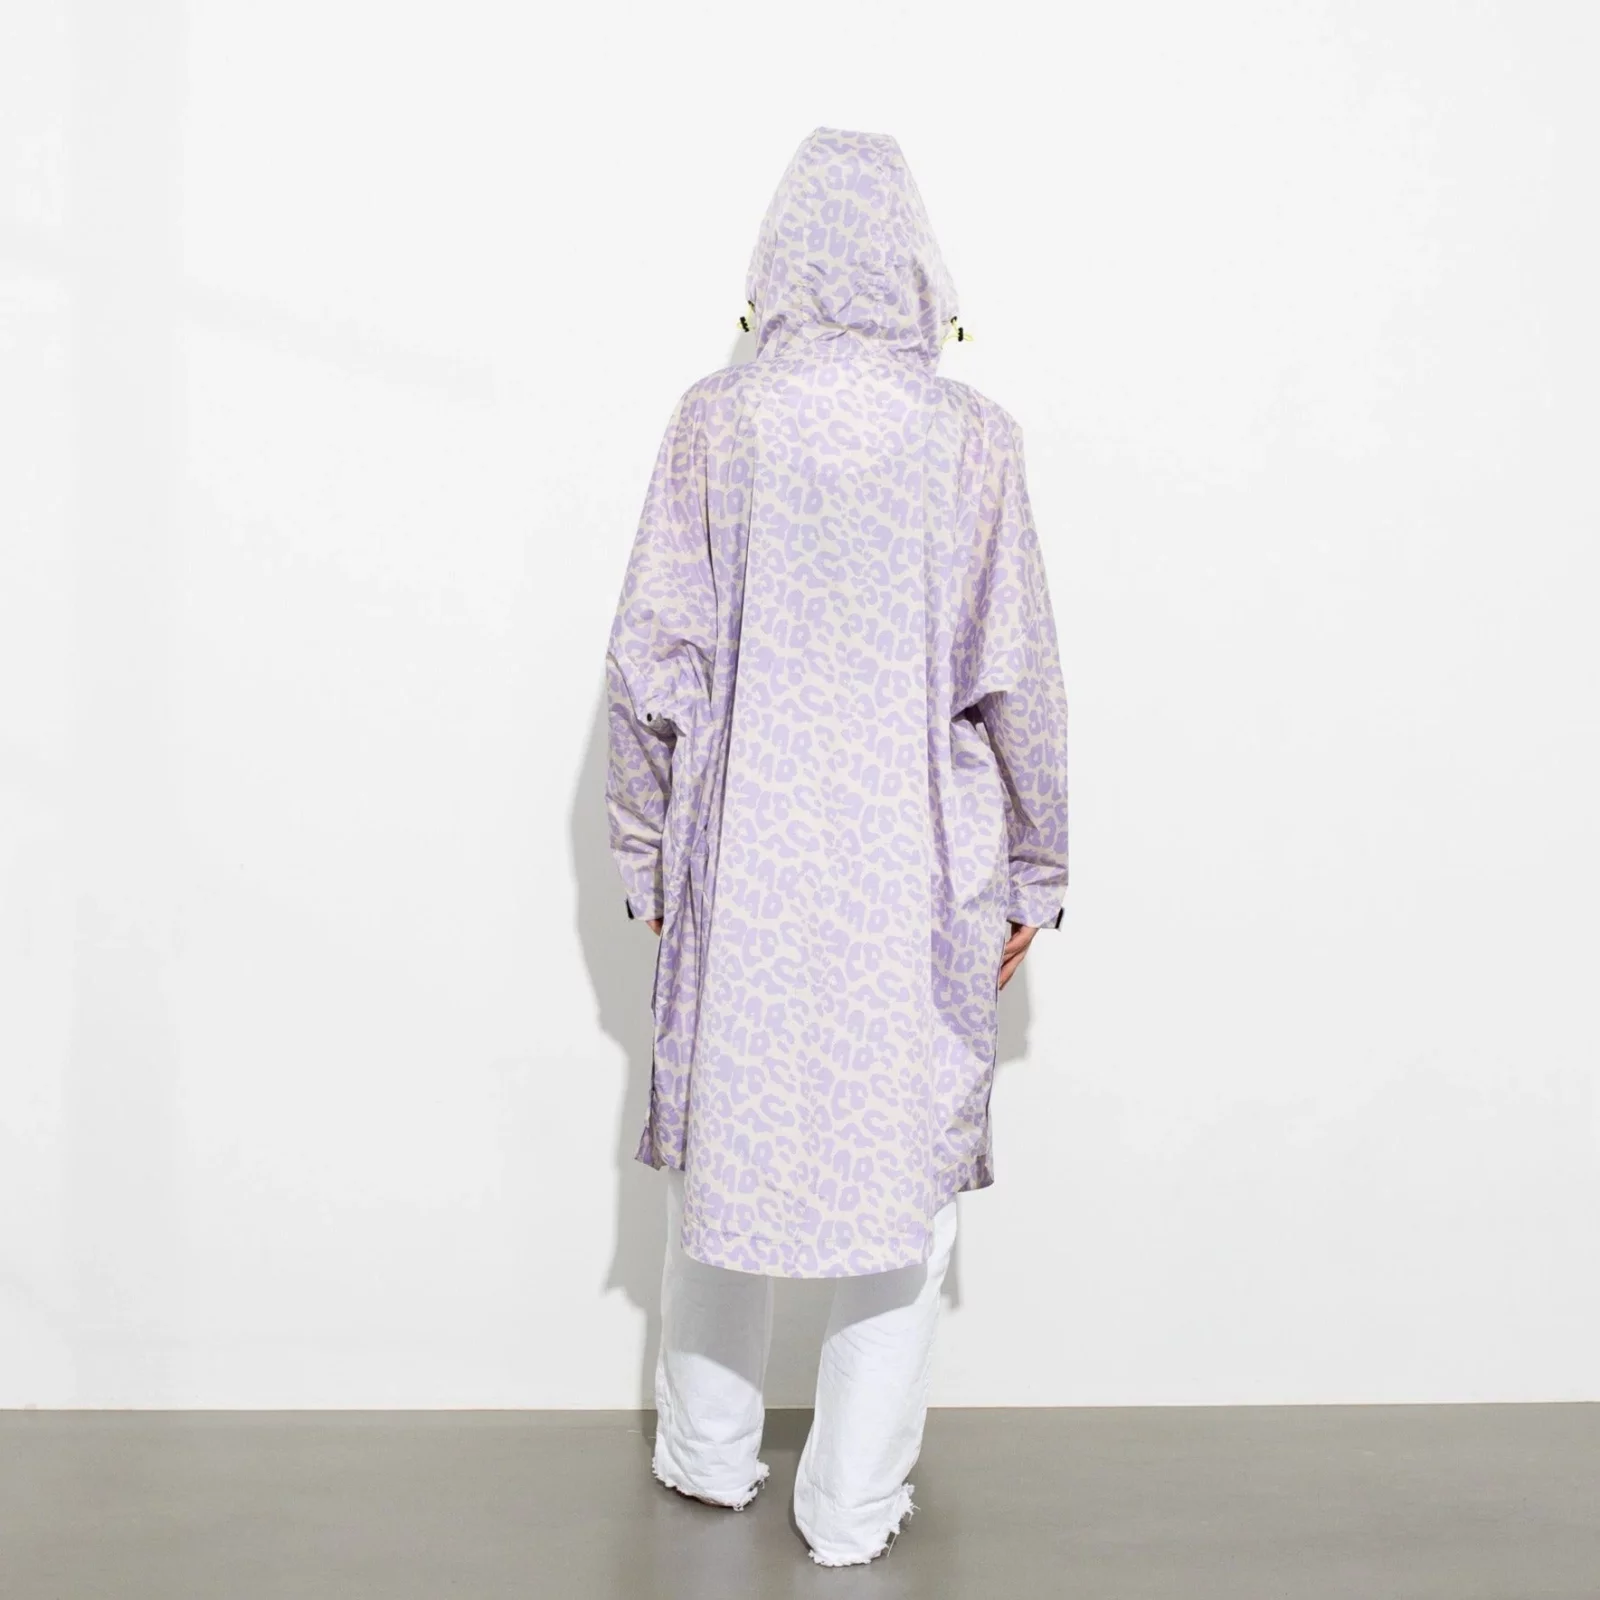 VIVI MARI - Raincoat leo splashes lavender/grey 9